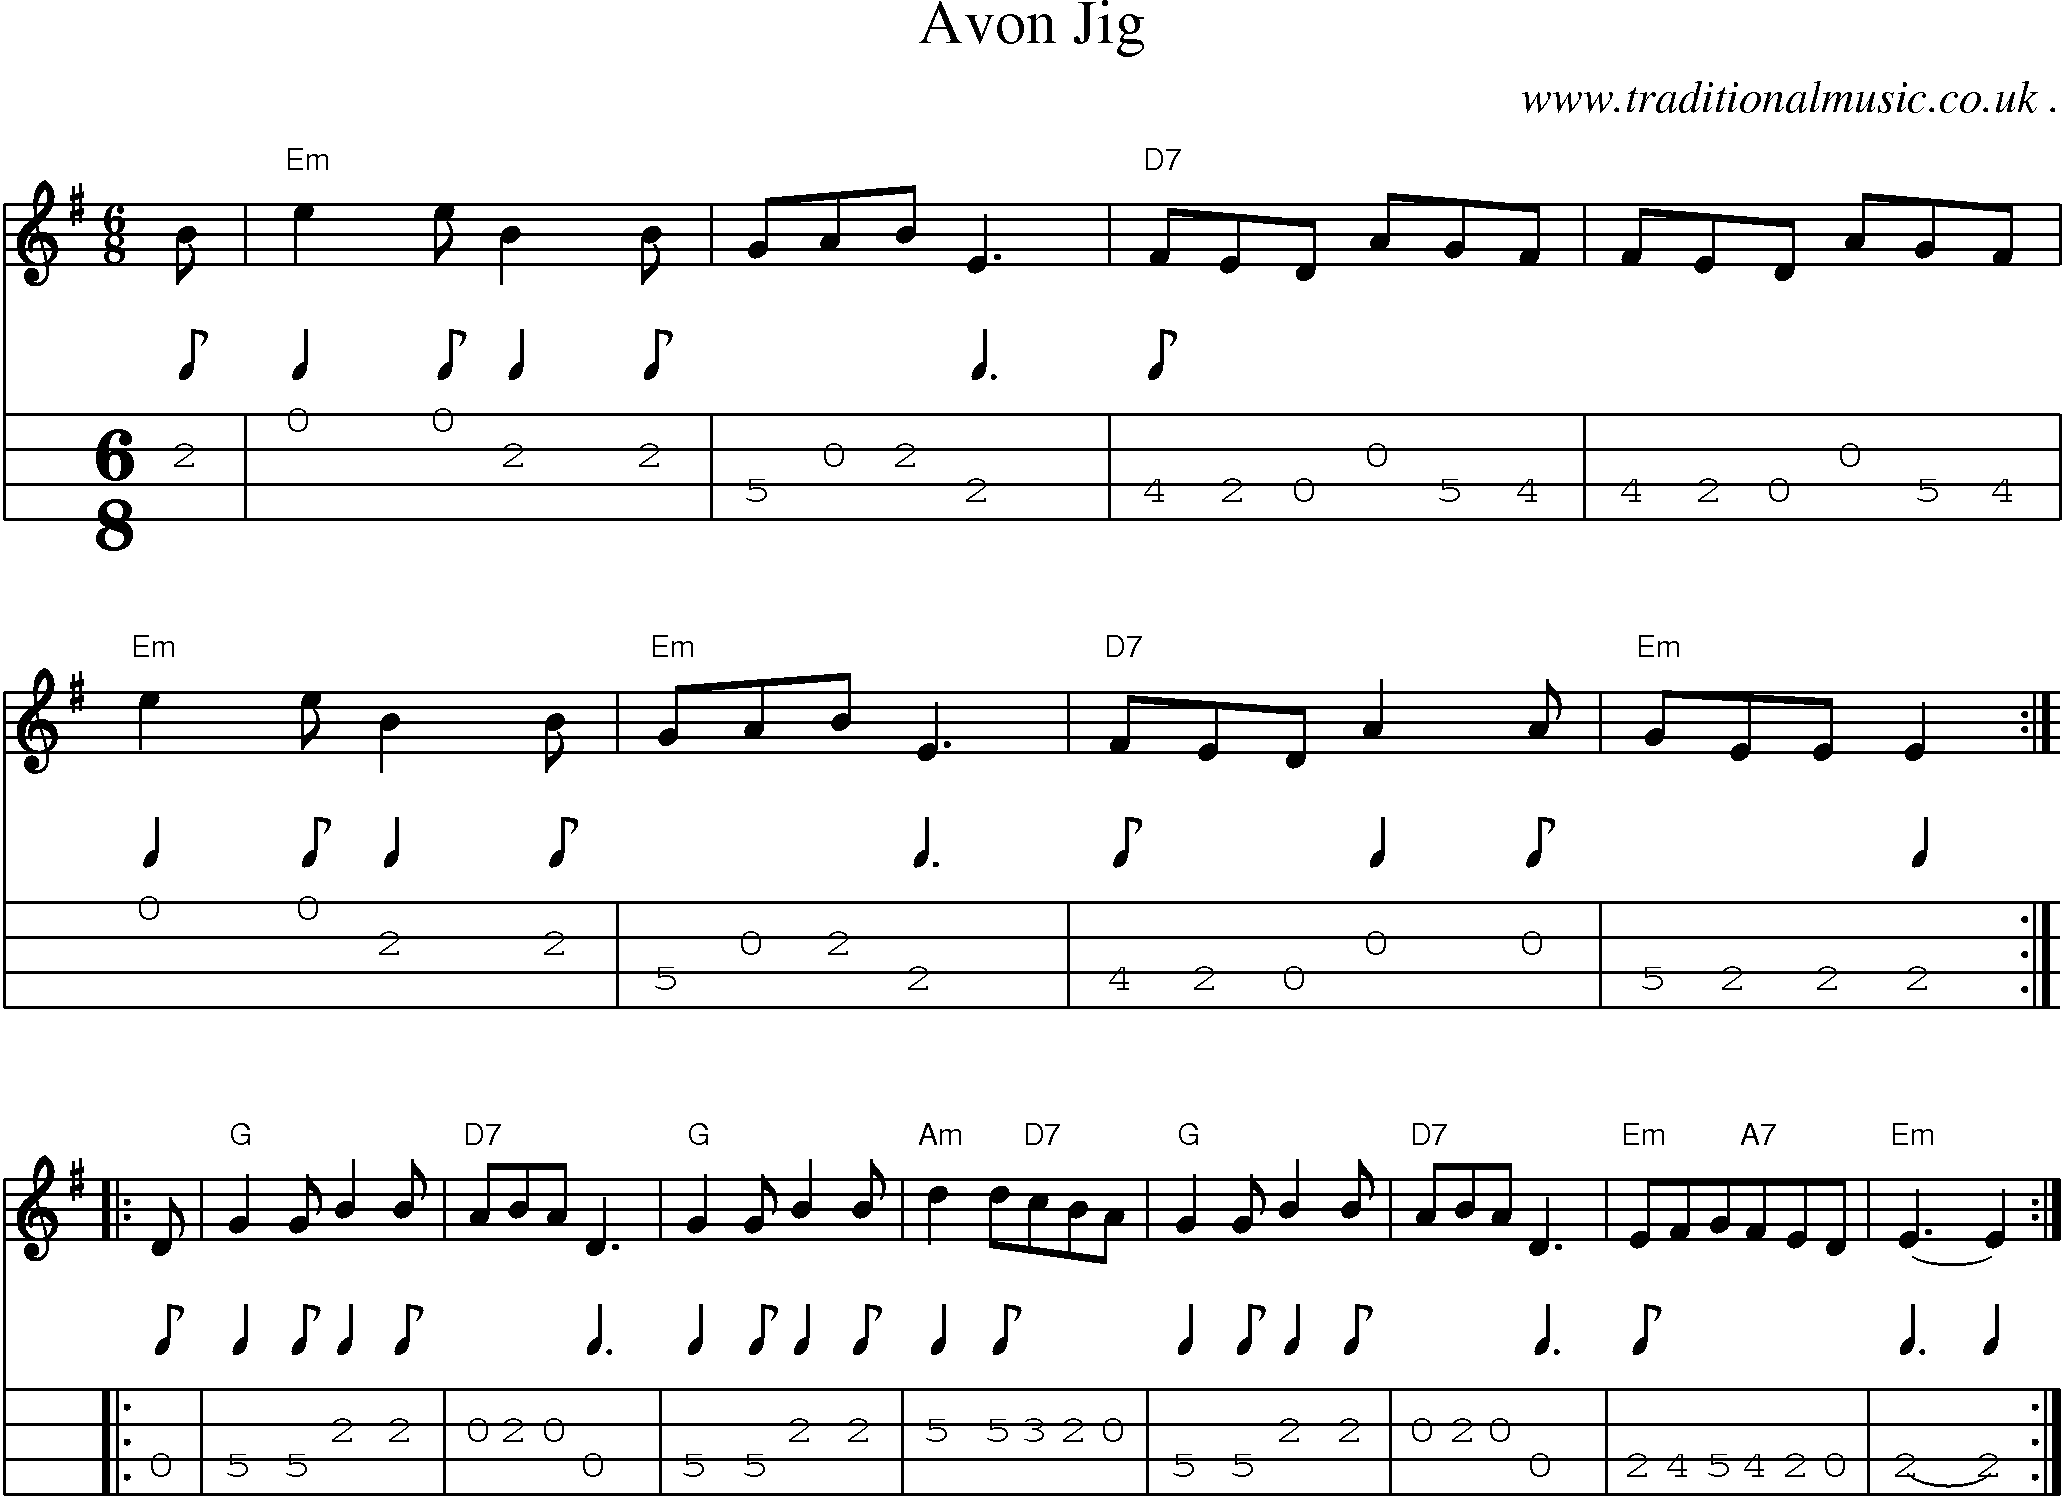 Sheet-Music and Mandolin Tabs for Avon Jig